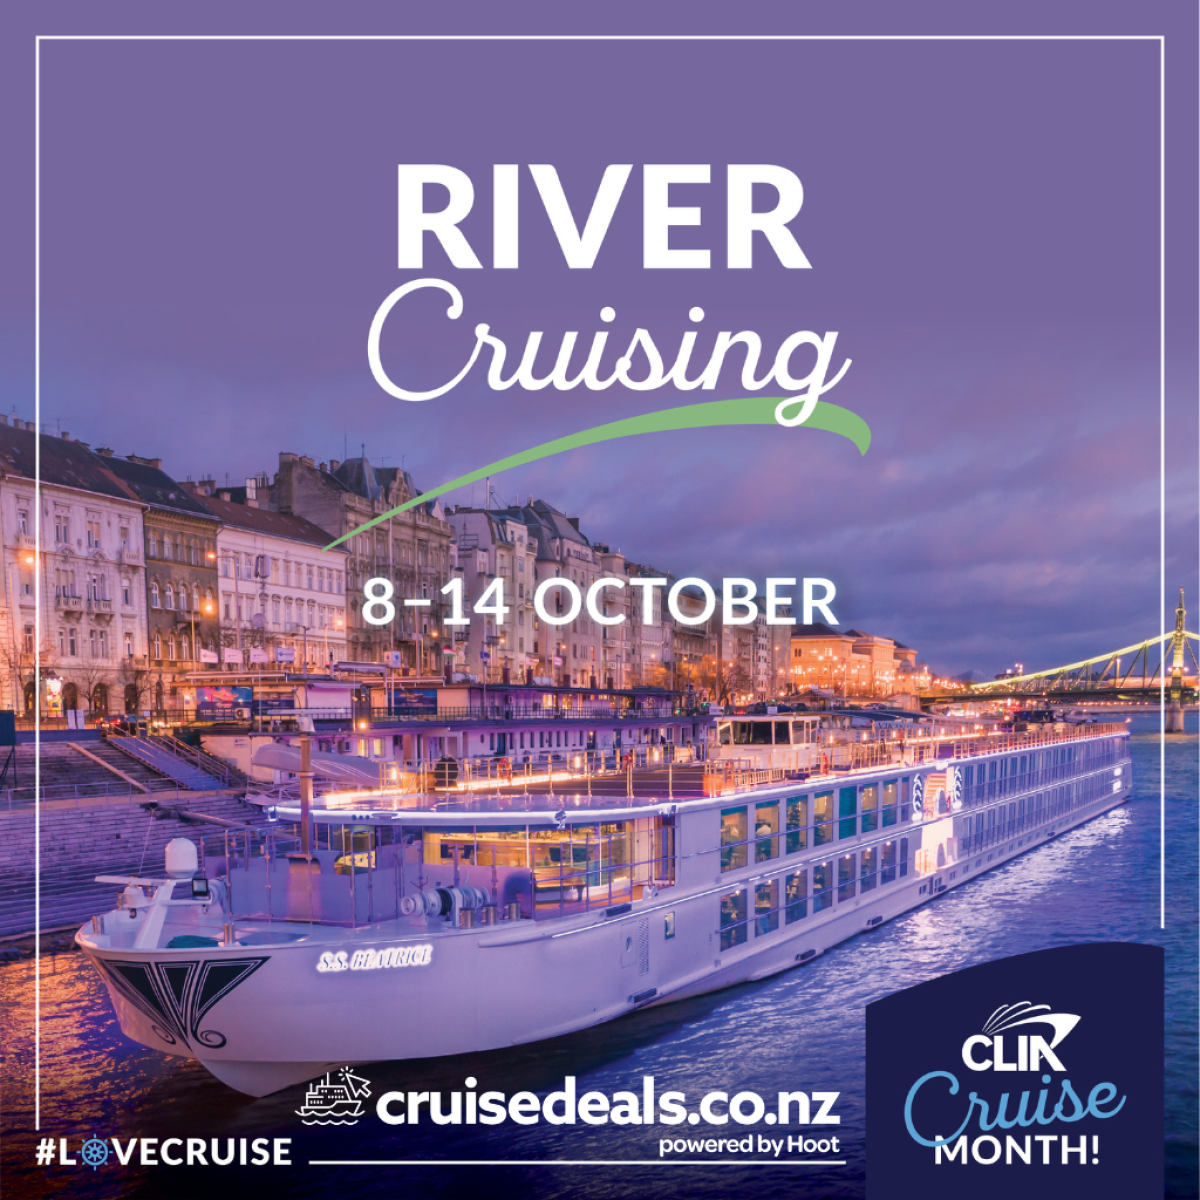 CLIA Cruise Month River Cruise Deals